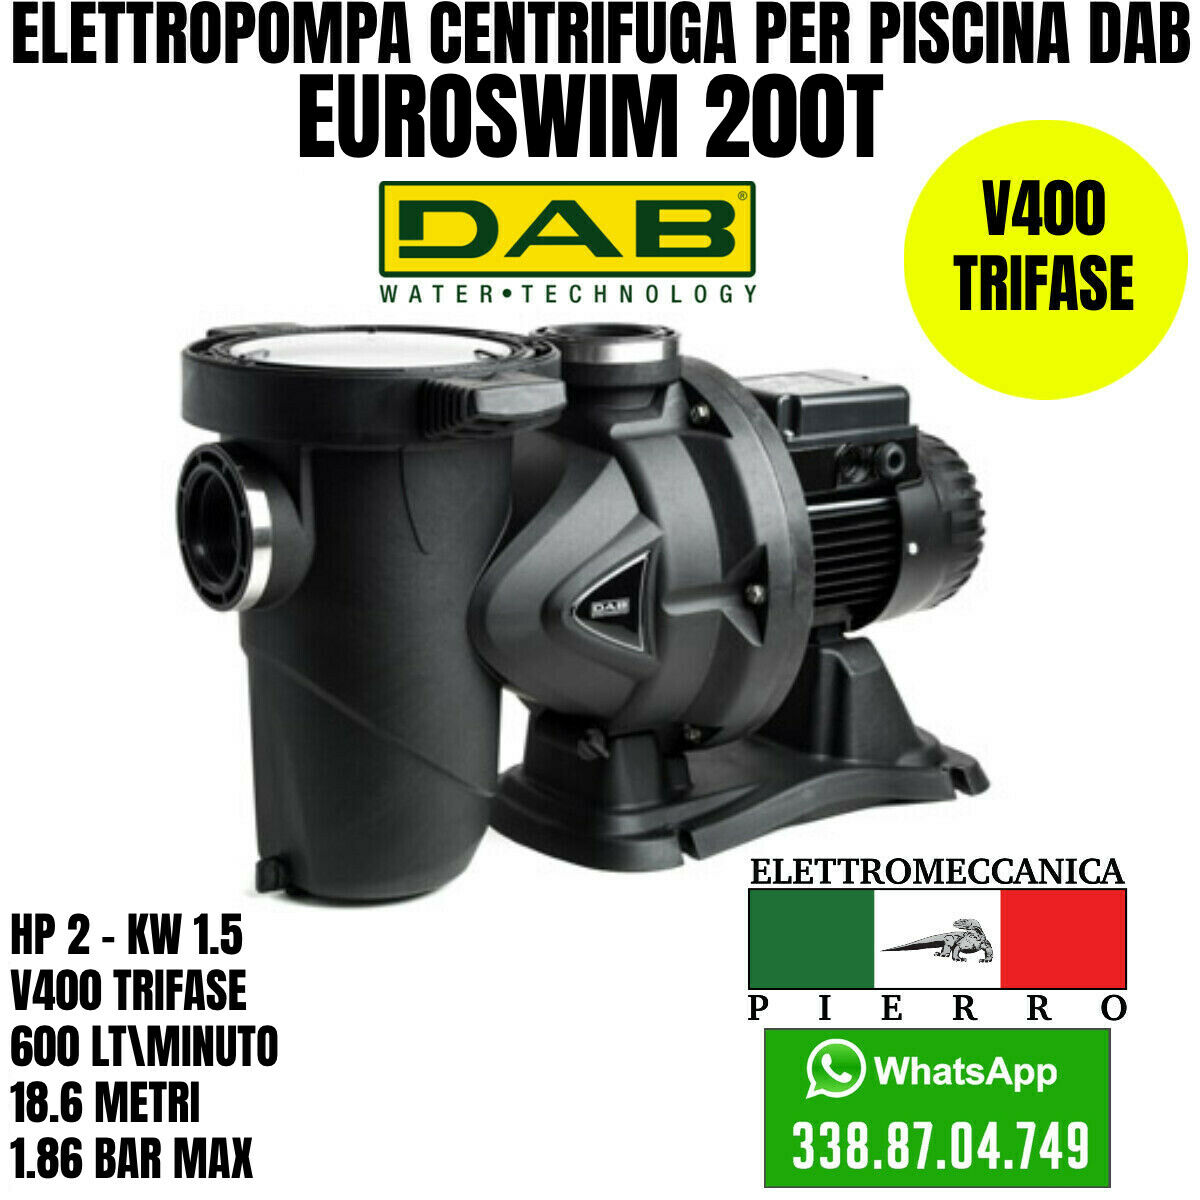 Pompa per piscina DAB EuroSwim EuroPro Elettropompa centrifuga piscine HP 0/3 Logo Elettromeccanica Pierro Elettromeccanica Express Assistenza EuroSwim 200T Hp 2 - KW 1.5 600LT/Minuto 18,6 Metri 1,86 BAR MAX V400